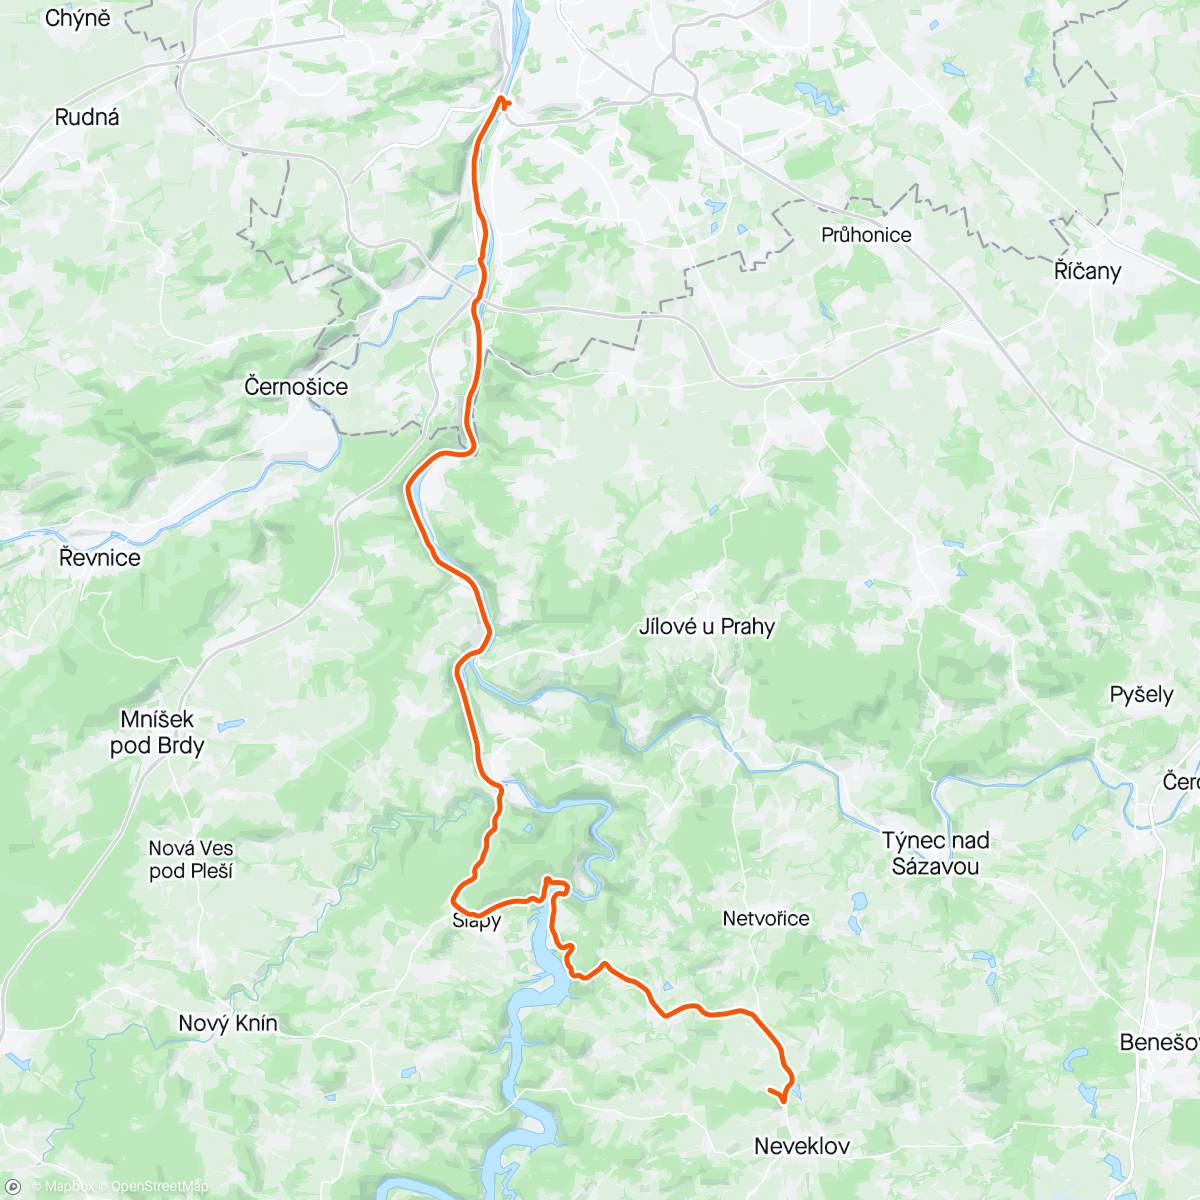 「Ze svatby」活動的地圖